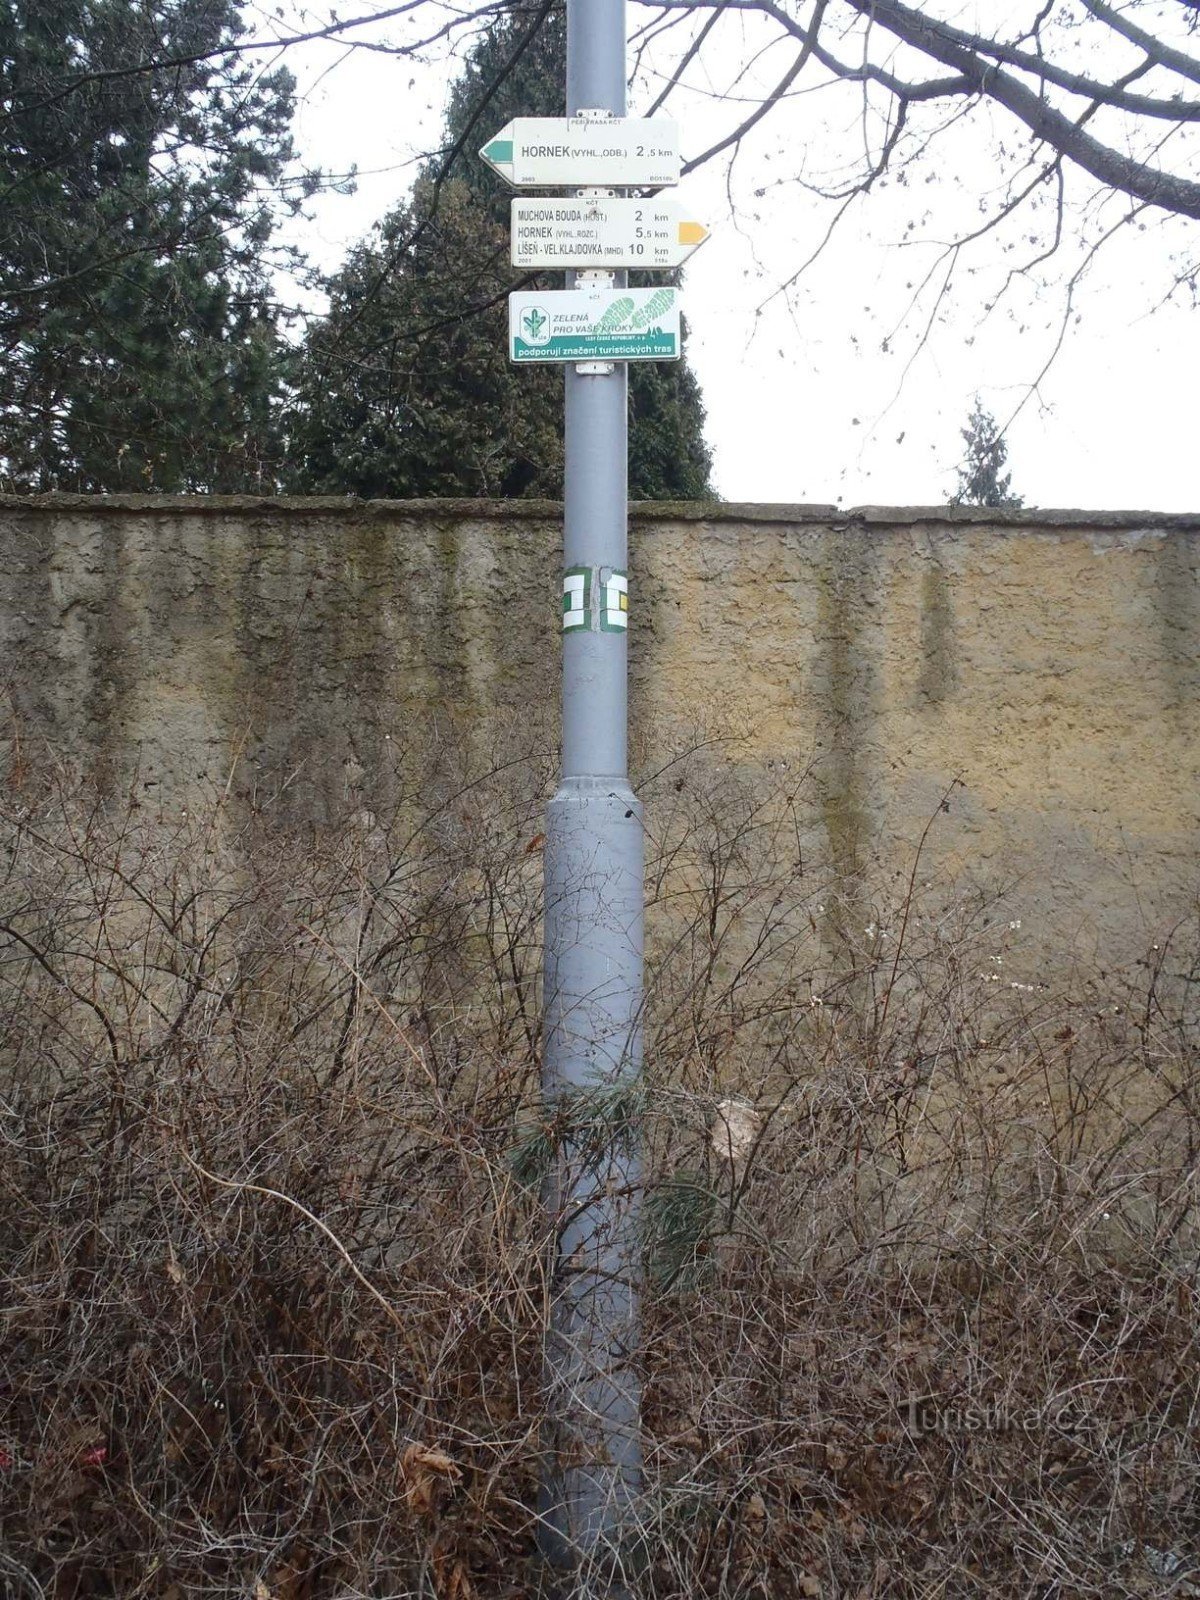 Poste indicador Brno Líšeň (transporte público) - 6.2.2012 de febrero de XNUMX